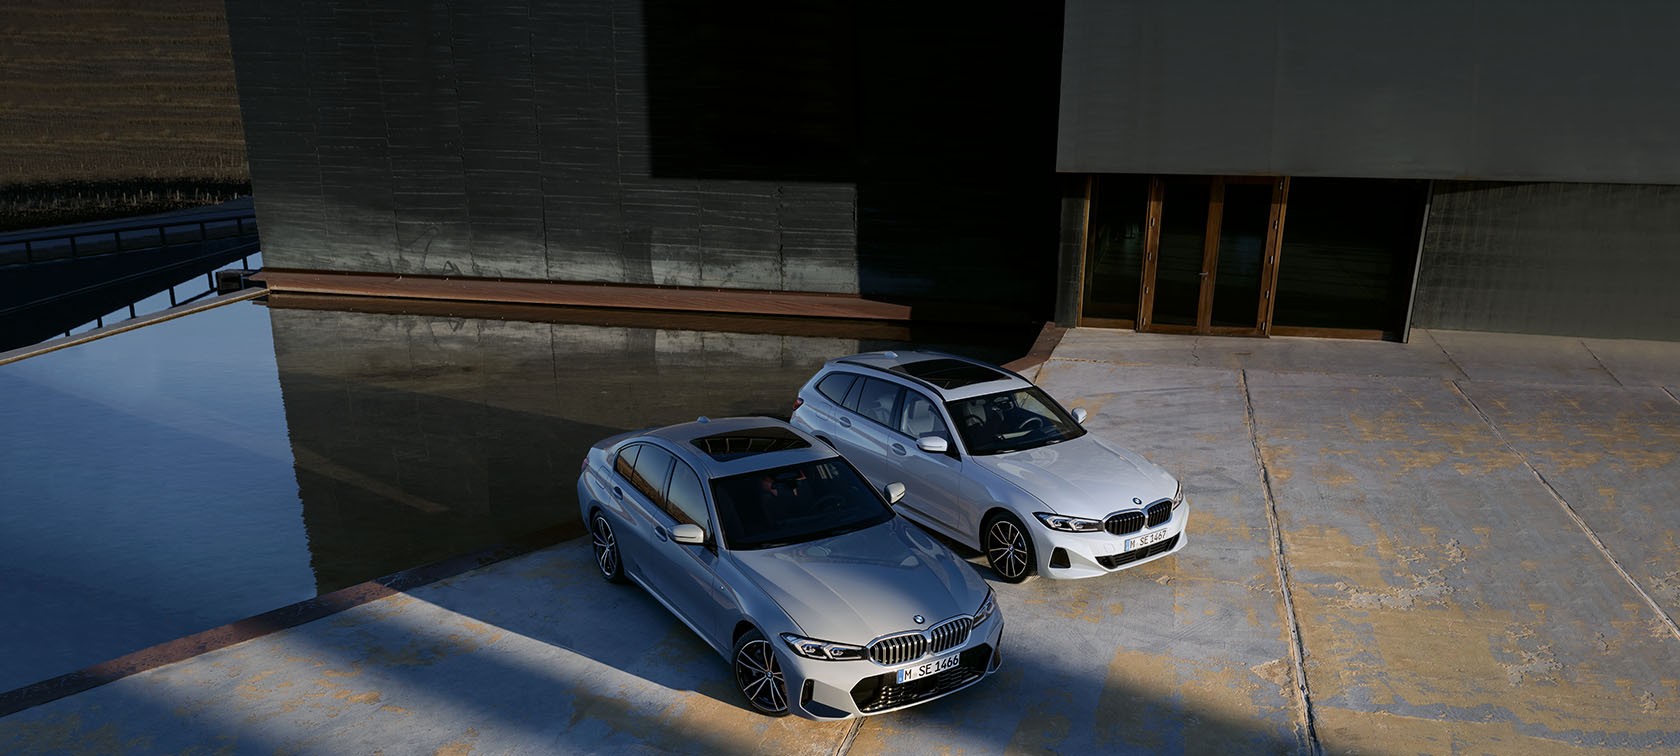 Autohaus Kimbeck GmbH: BMW Fahrzeuge, Services, Angebote u.v.m.